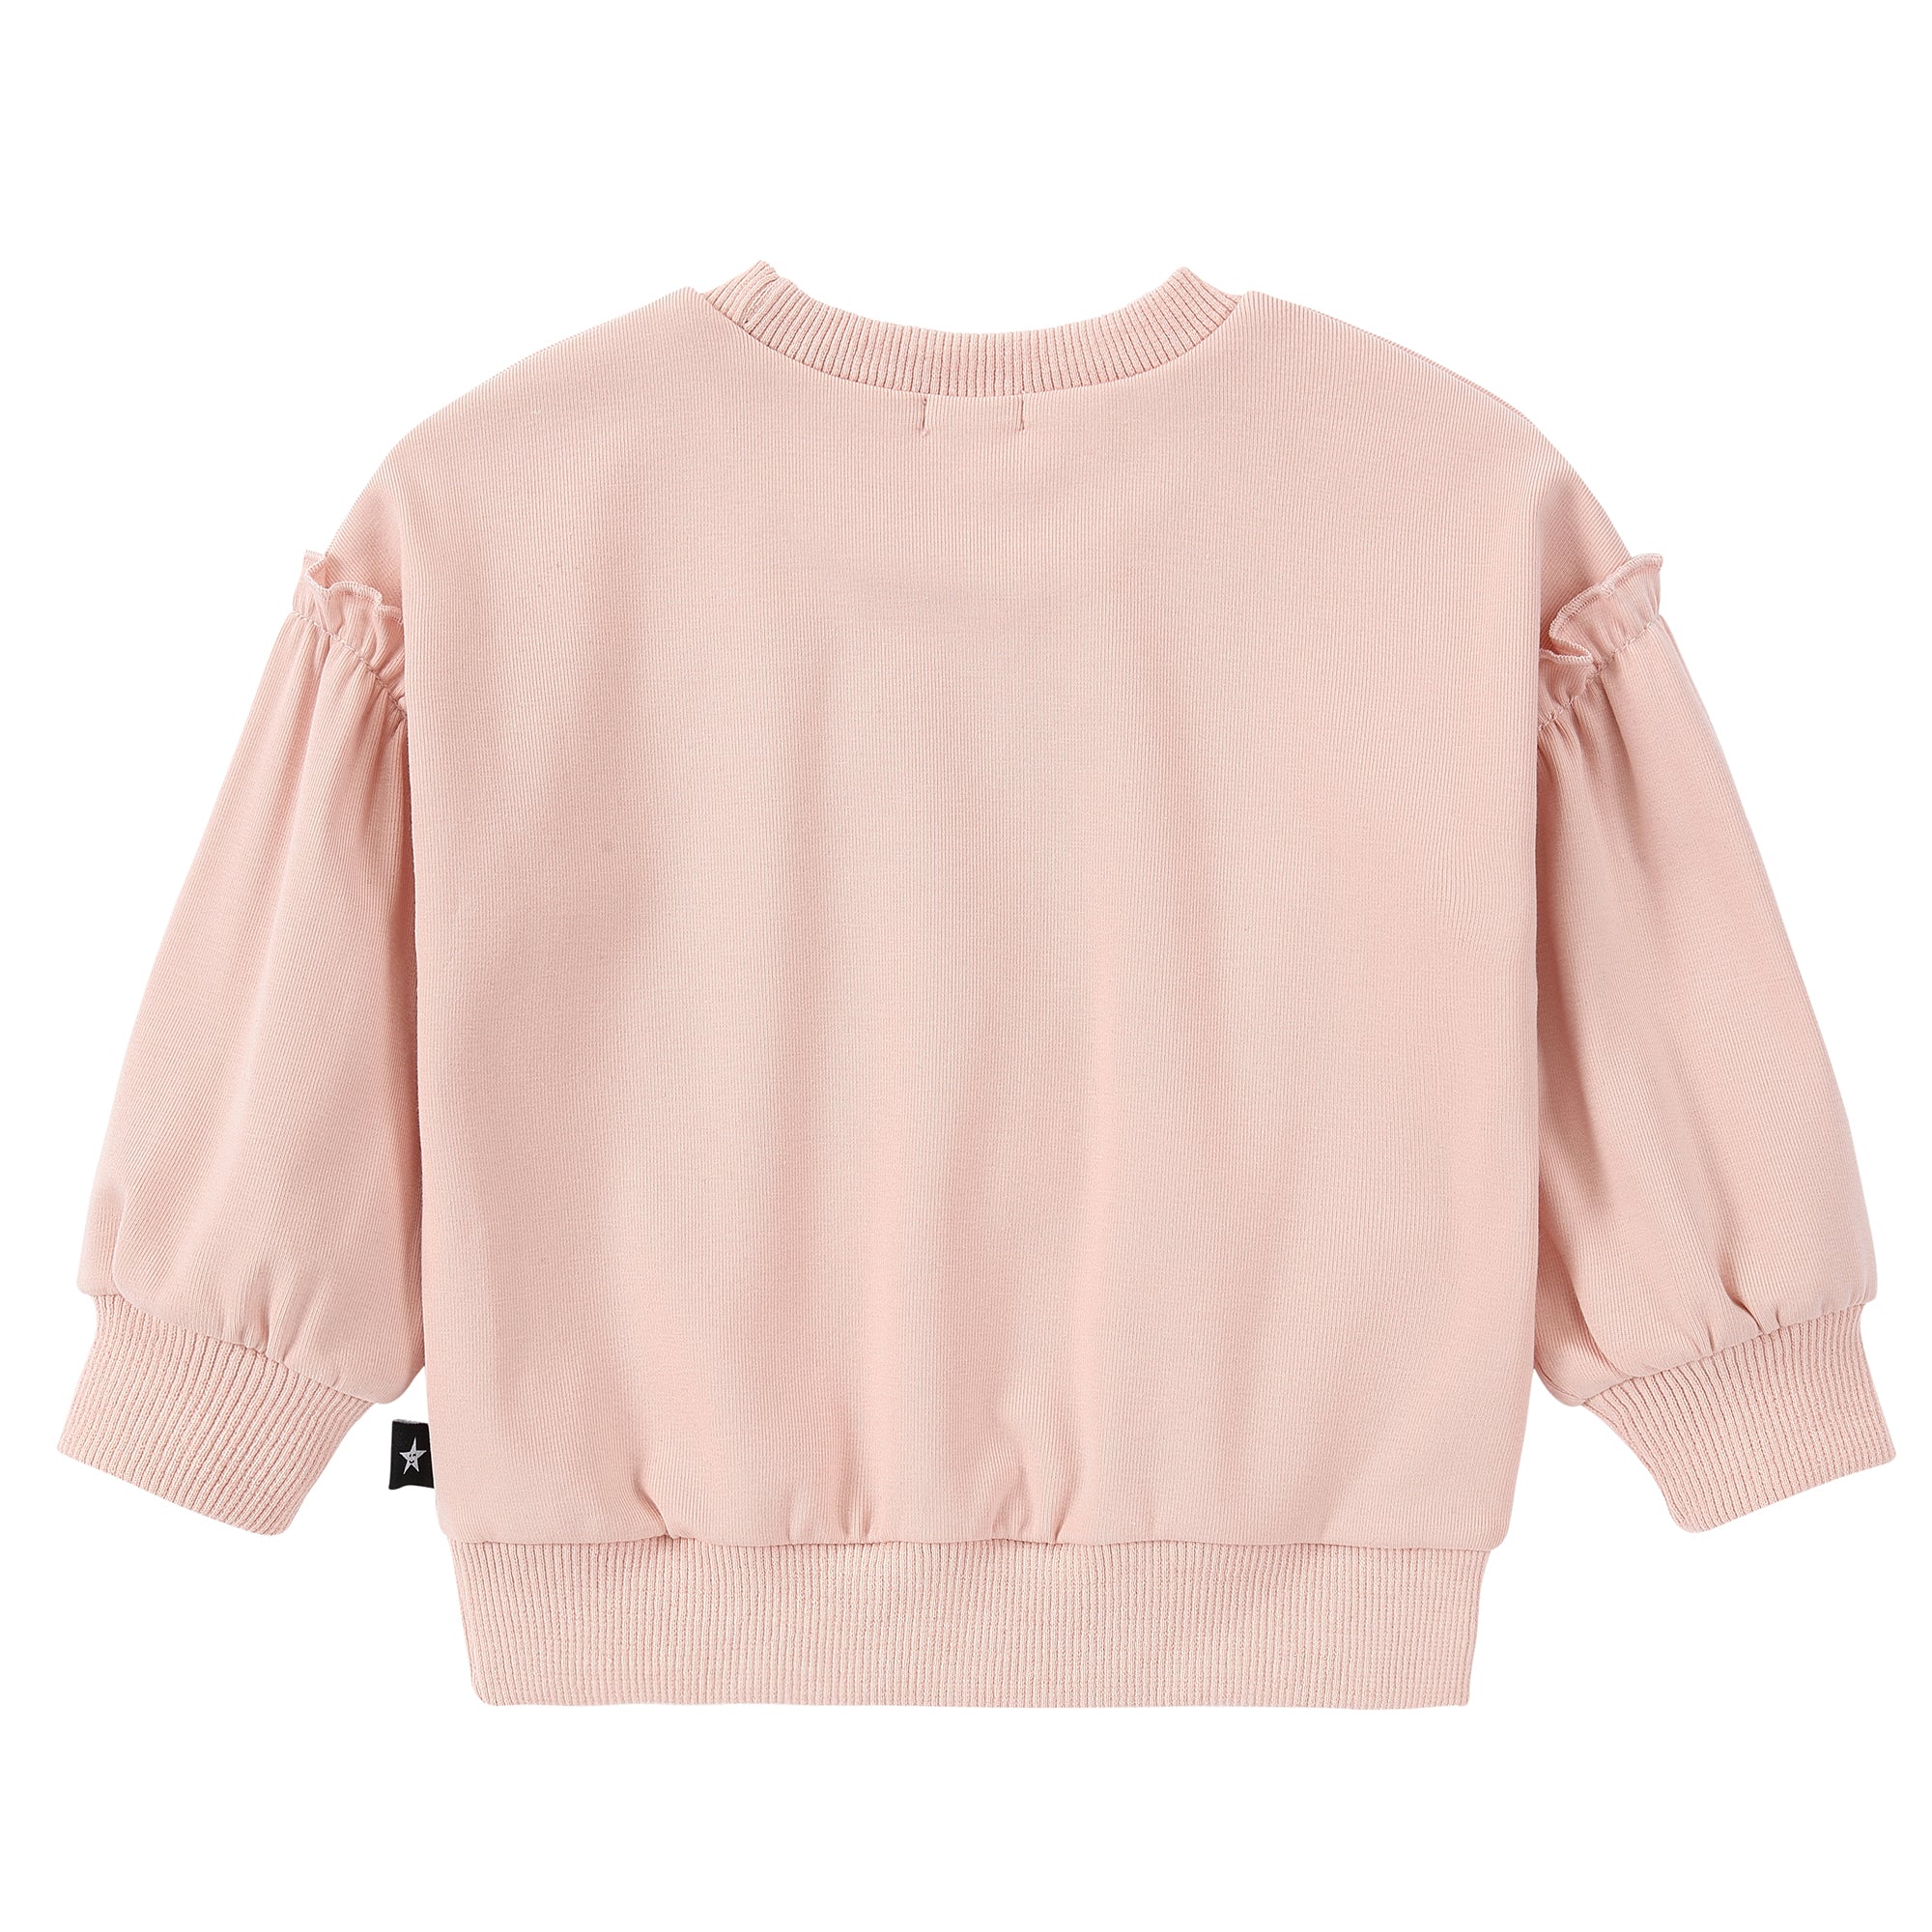 Light Pink Sweatshirt With Doll Print